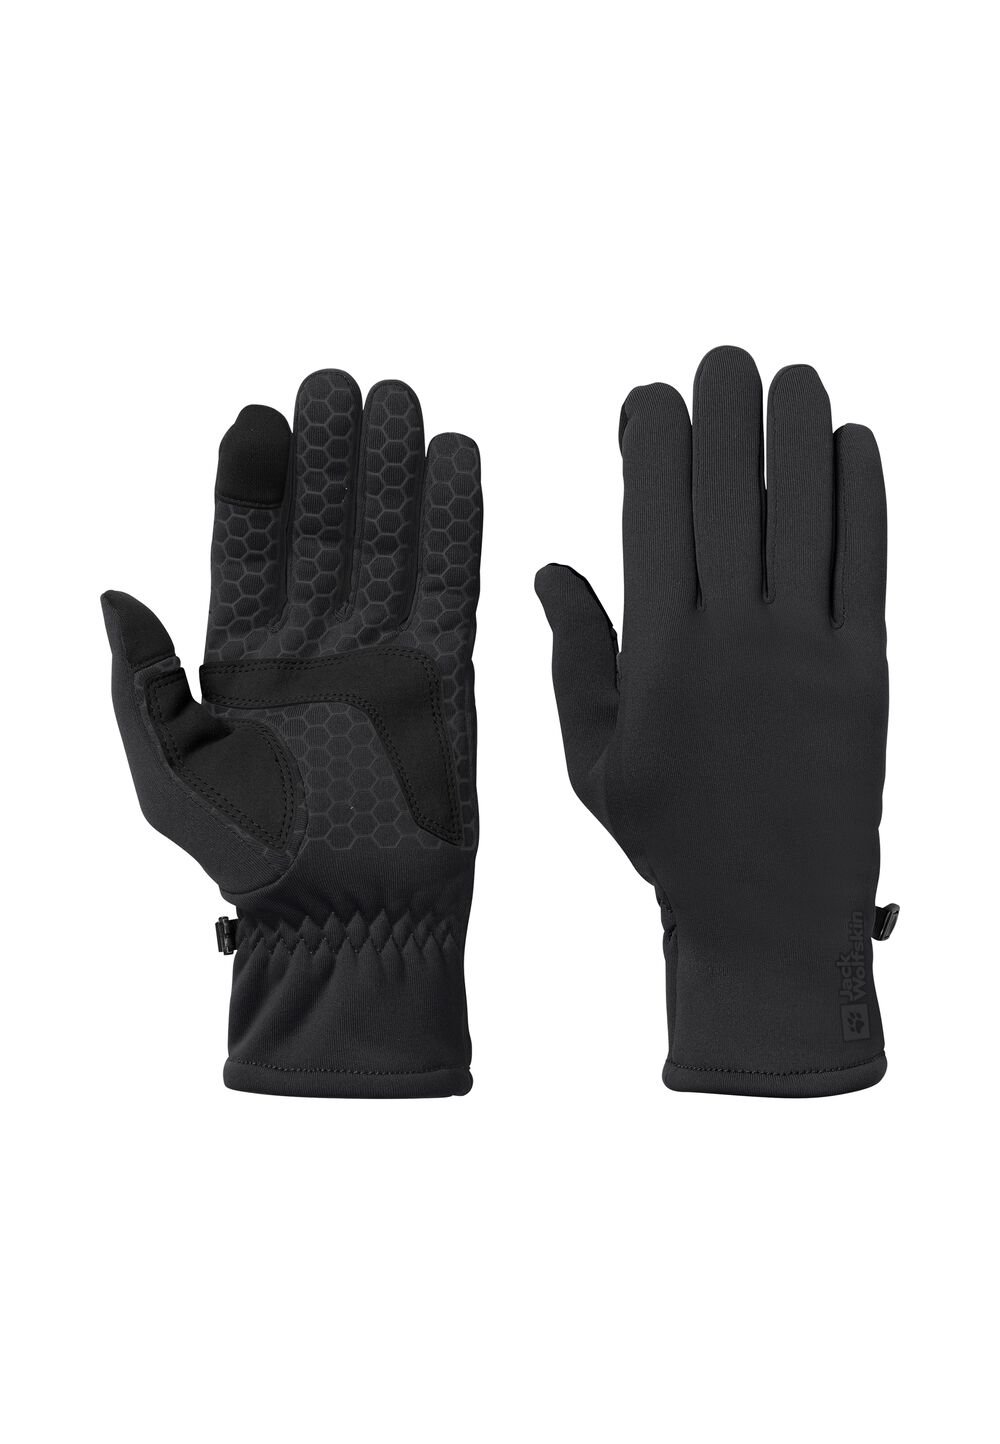 Jack Wolfskin Allrounder Glove Fleece handschoenen M zwart black